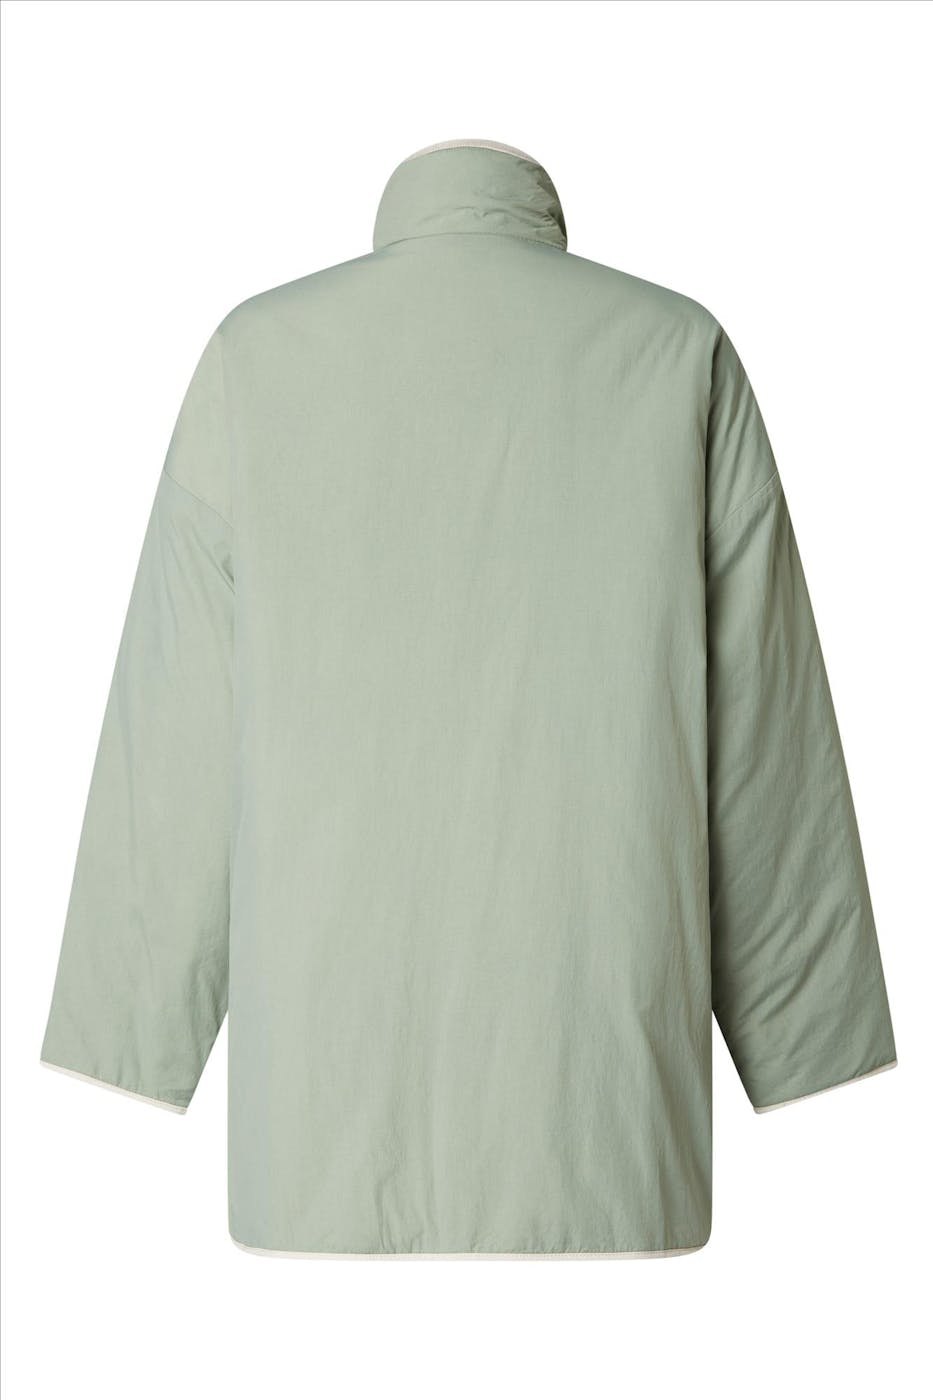 Tommy Jeans - Groen-beige Reversible Padded jas